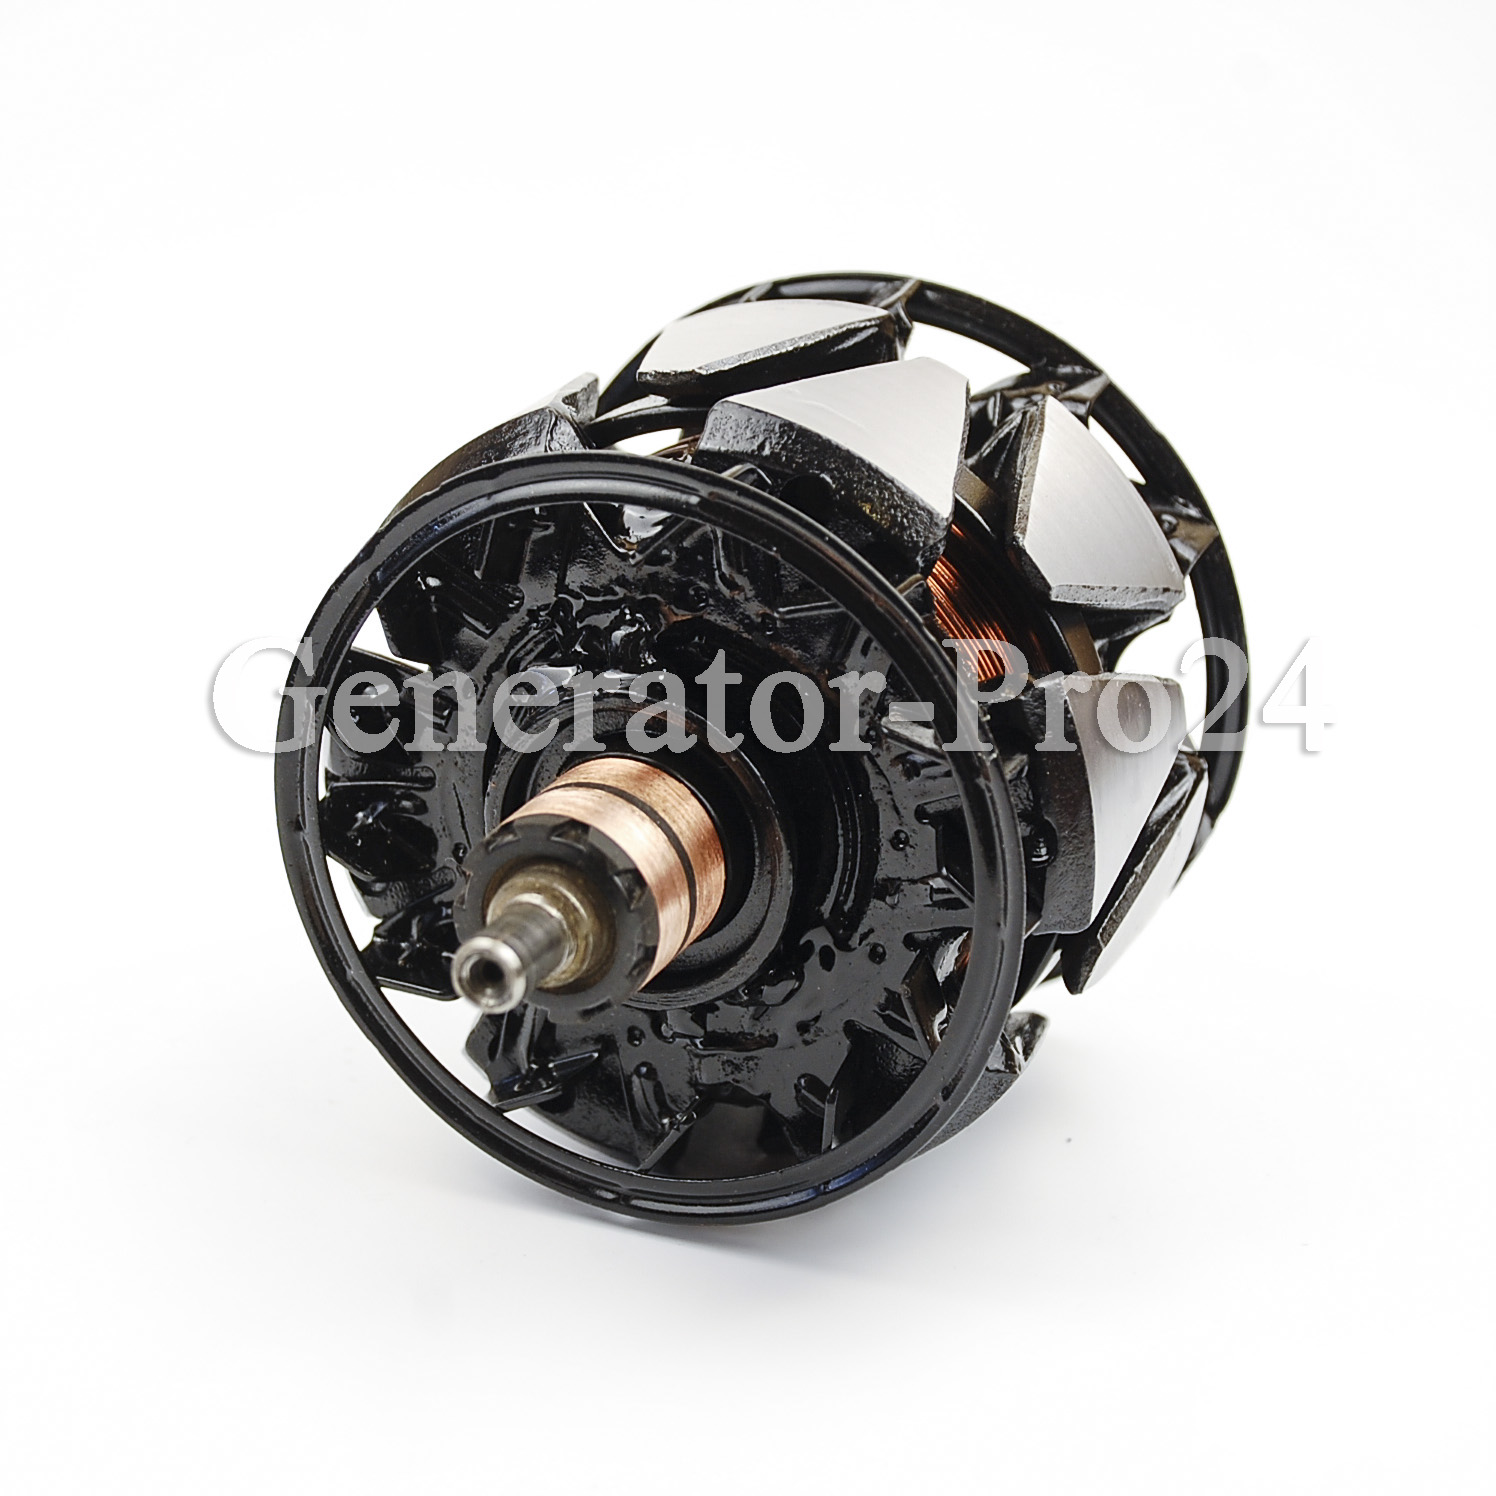 31101MCAS41  | Generator-Pro24  